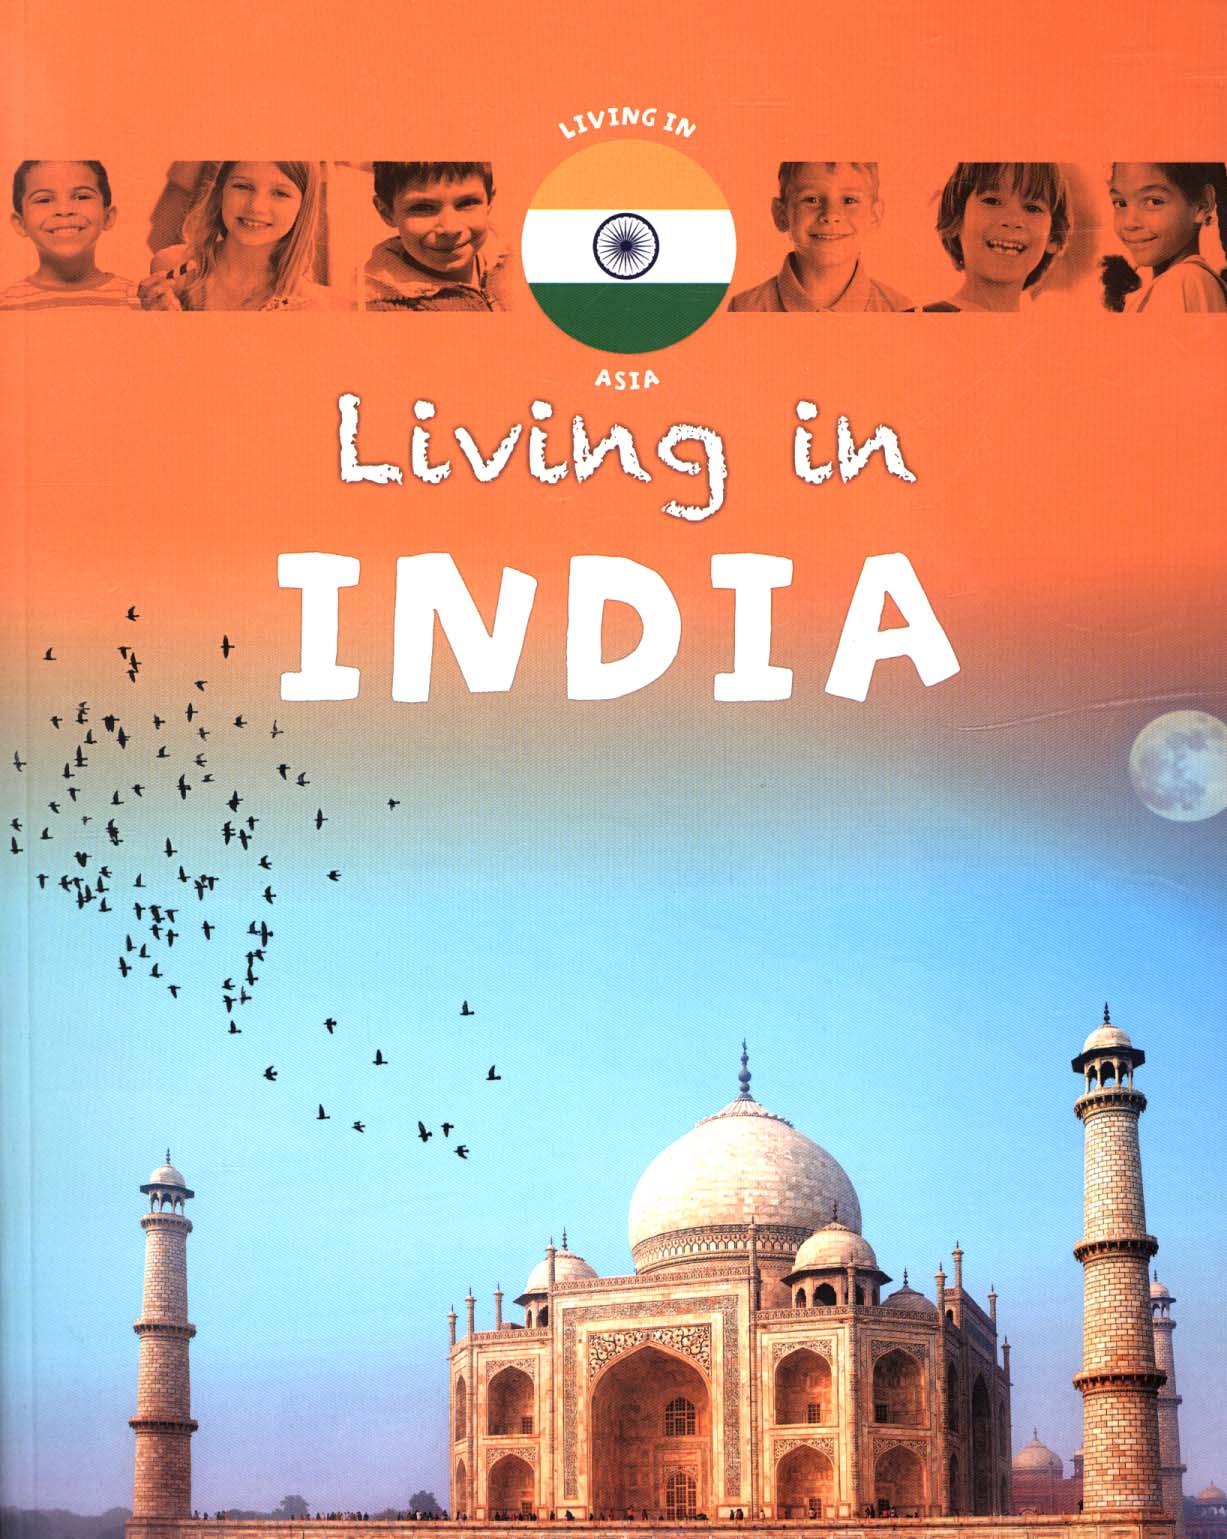 Living in Asia: India